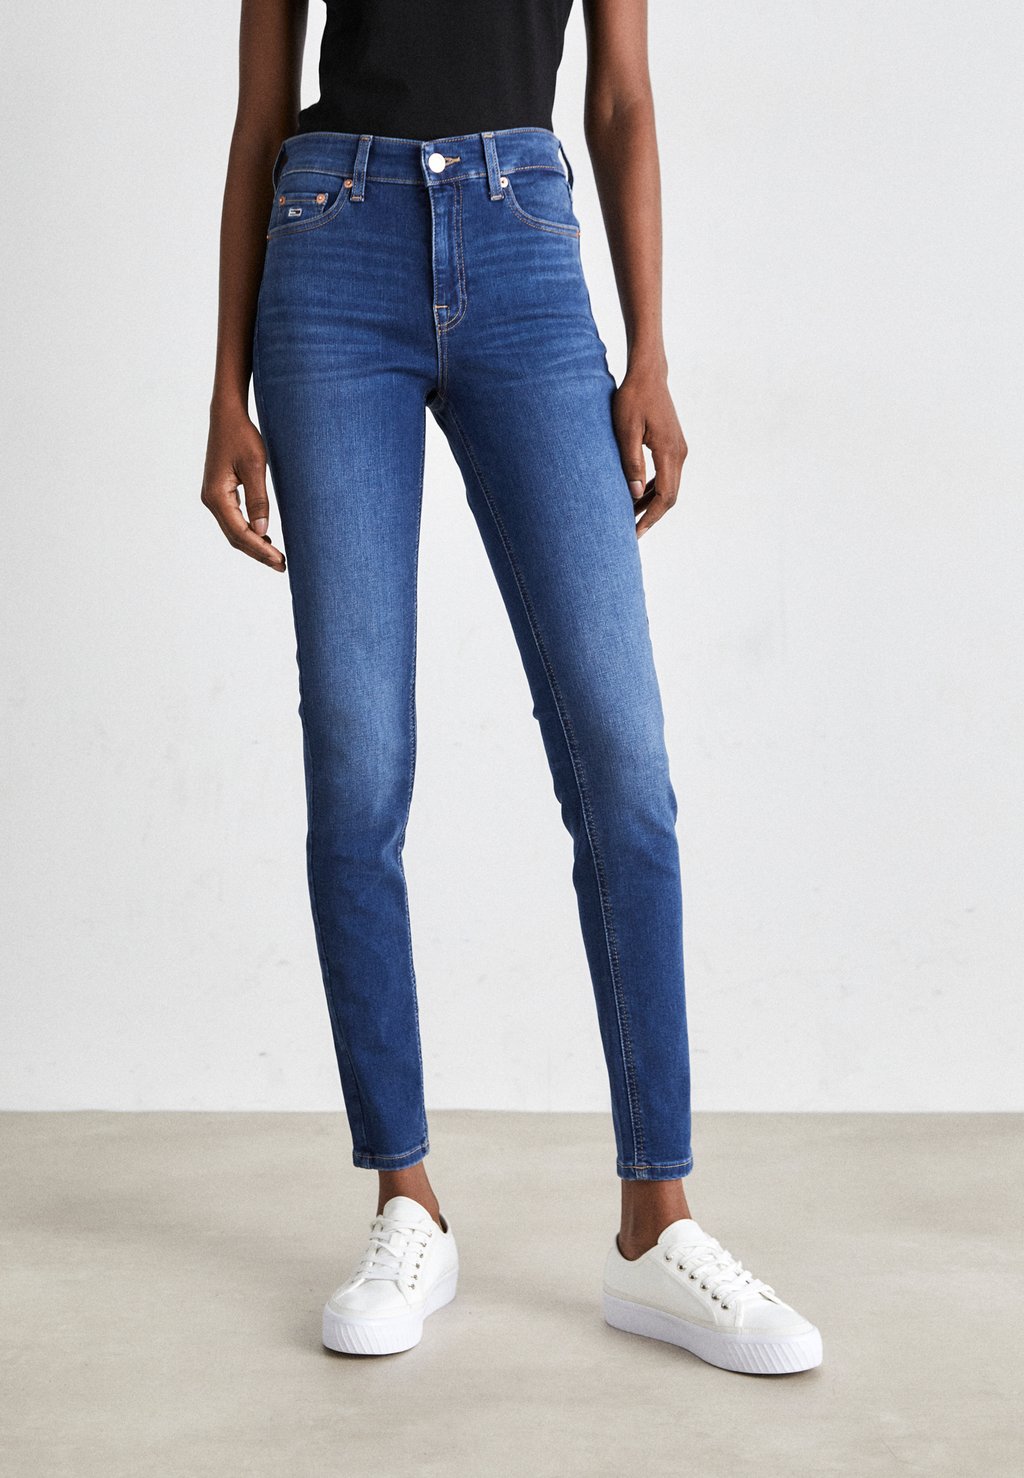 Джинсы Skinny Fit Nora Tommy Jeans, цвет denim medium джинсы skinny fit simon tommy jeans цвет denim dark